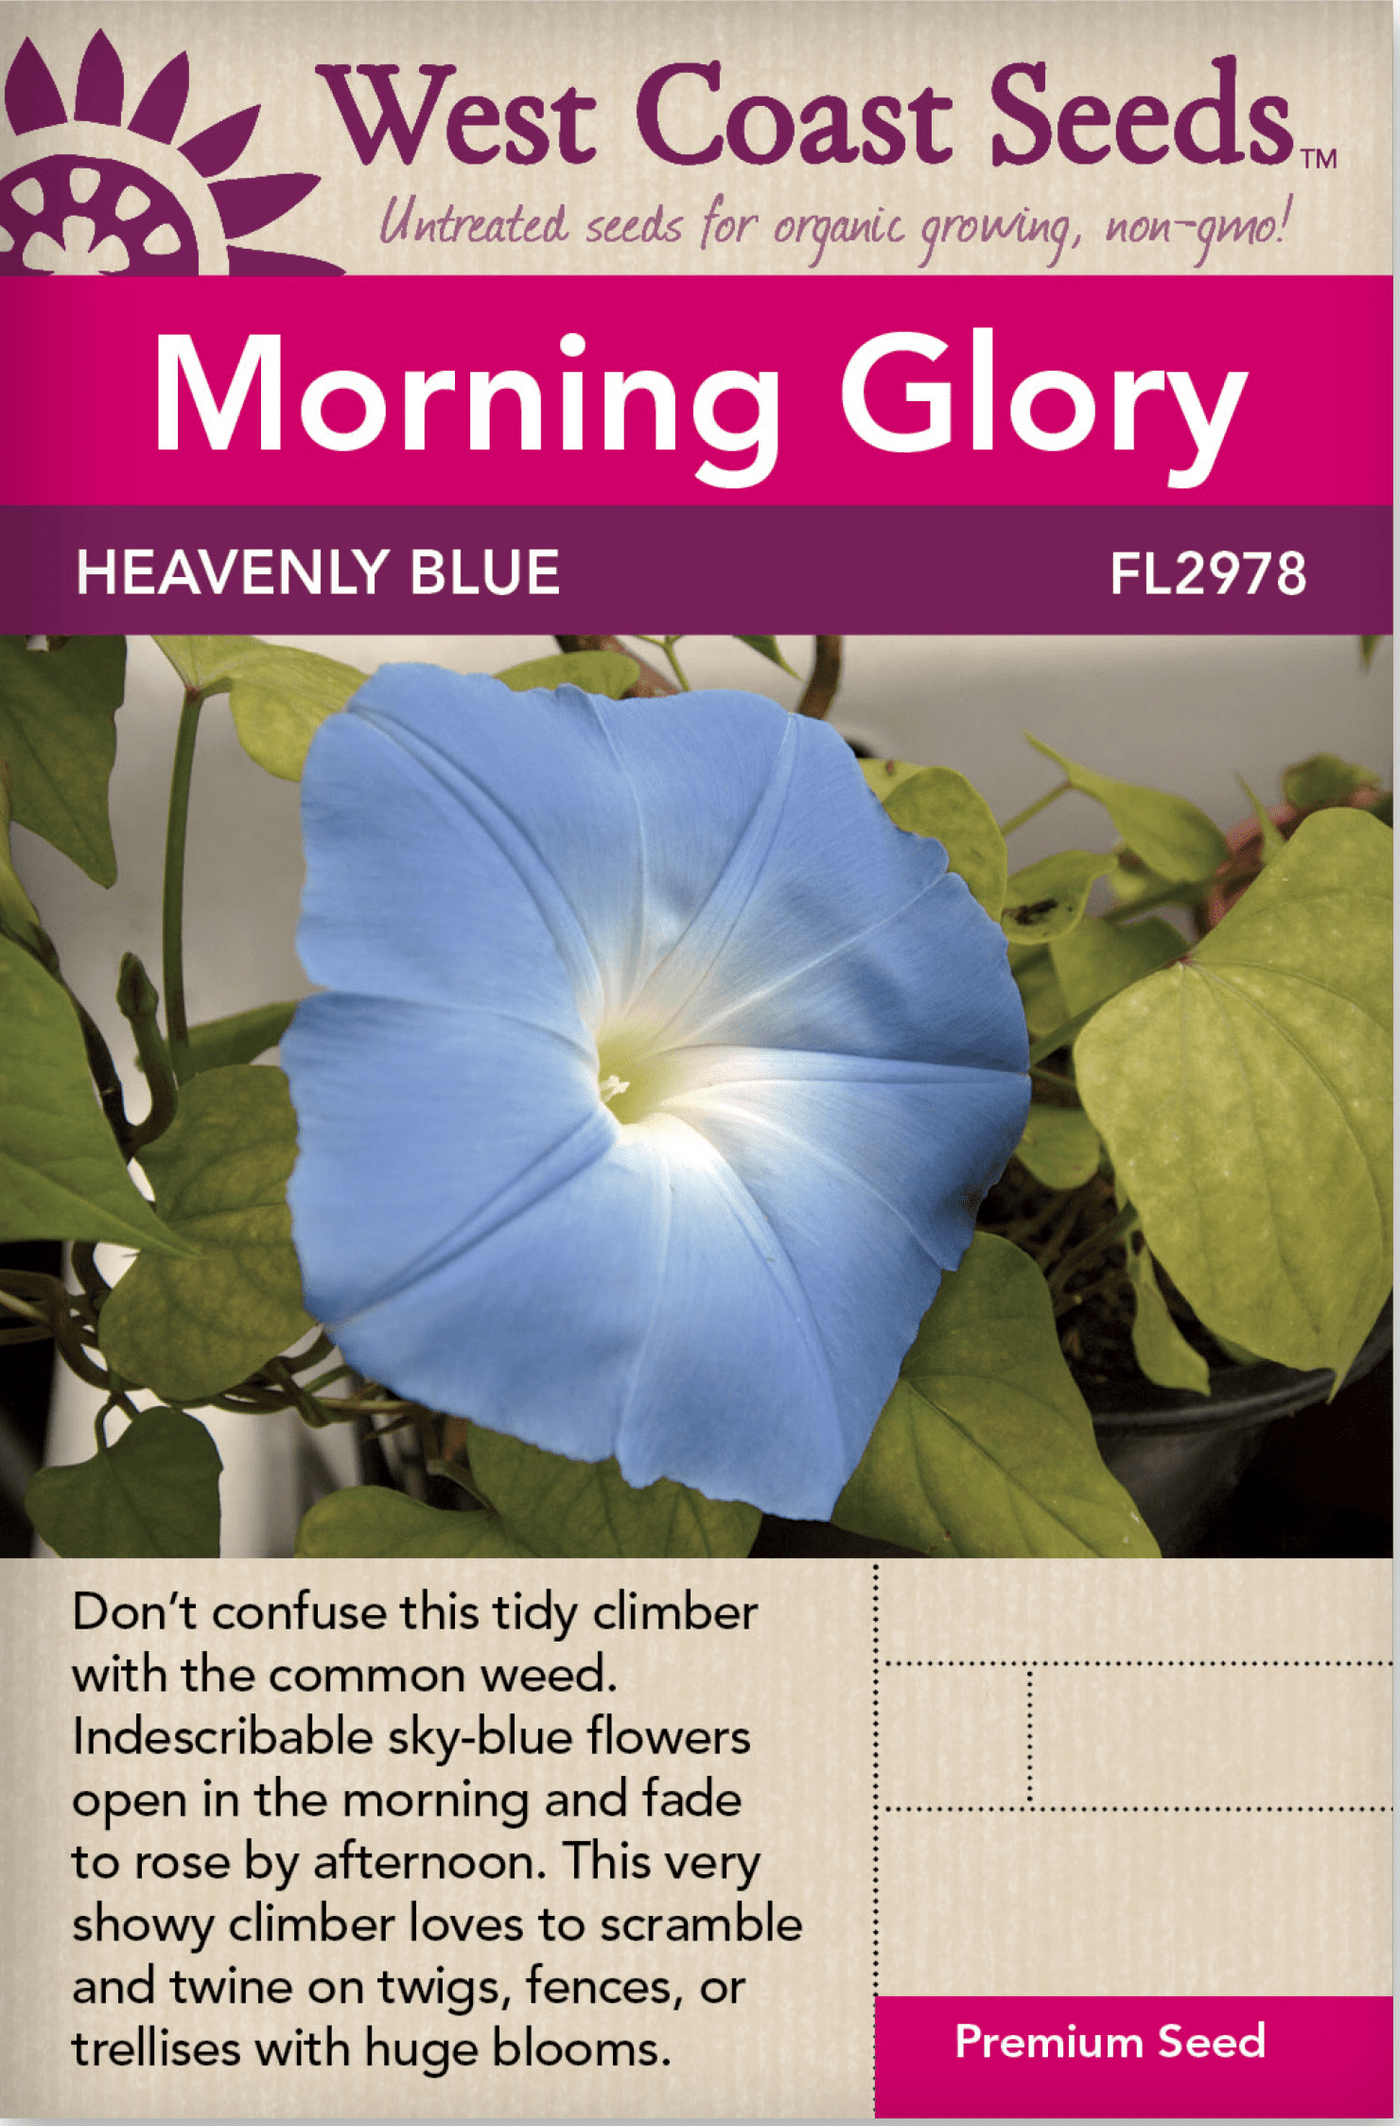 Morning Glory Heavenly Blue - West Coast Seeds